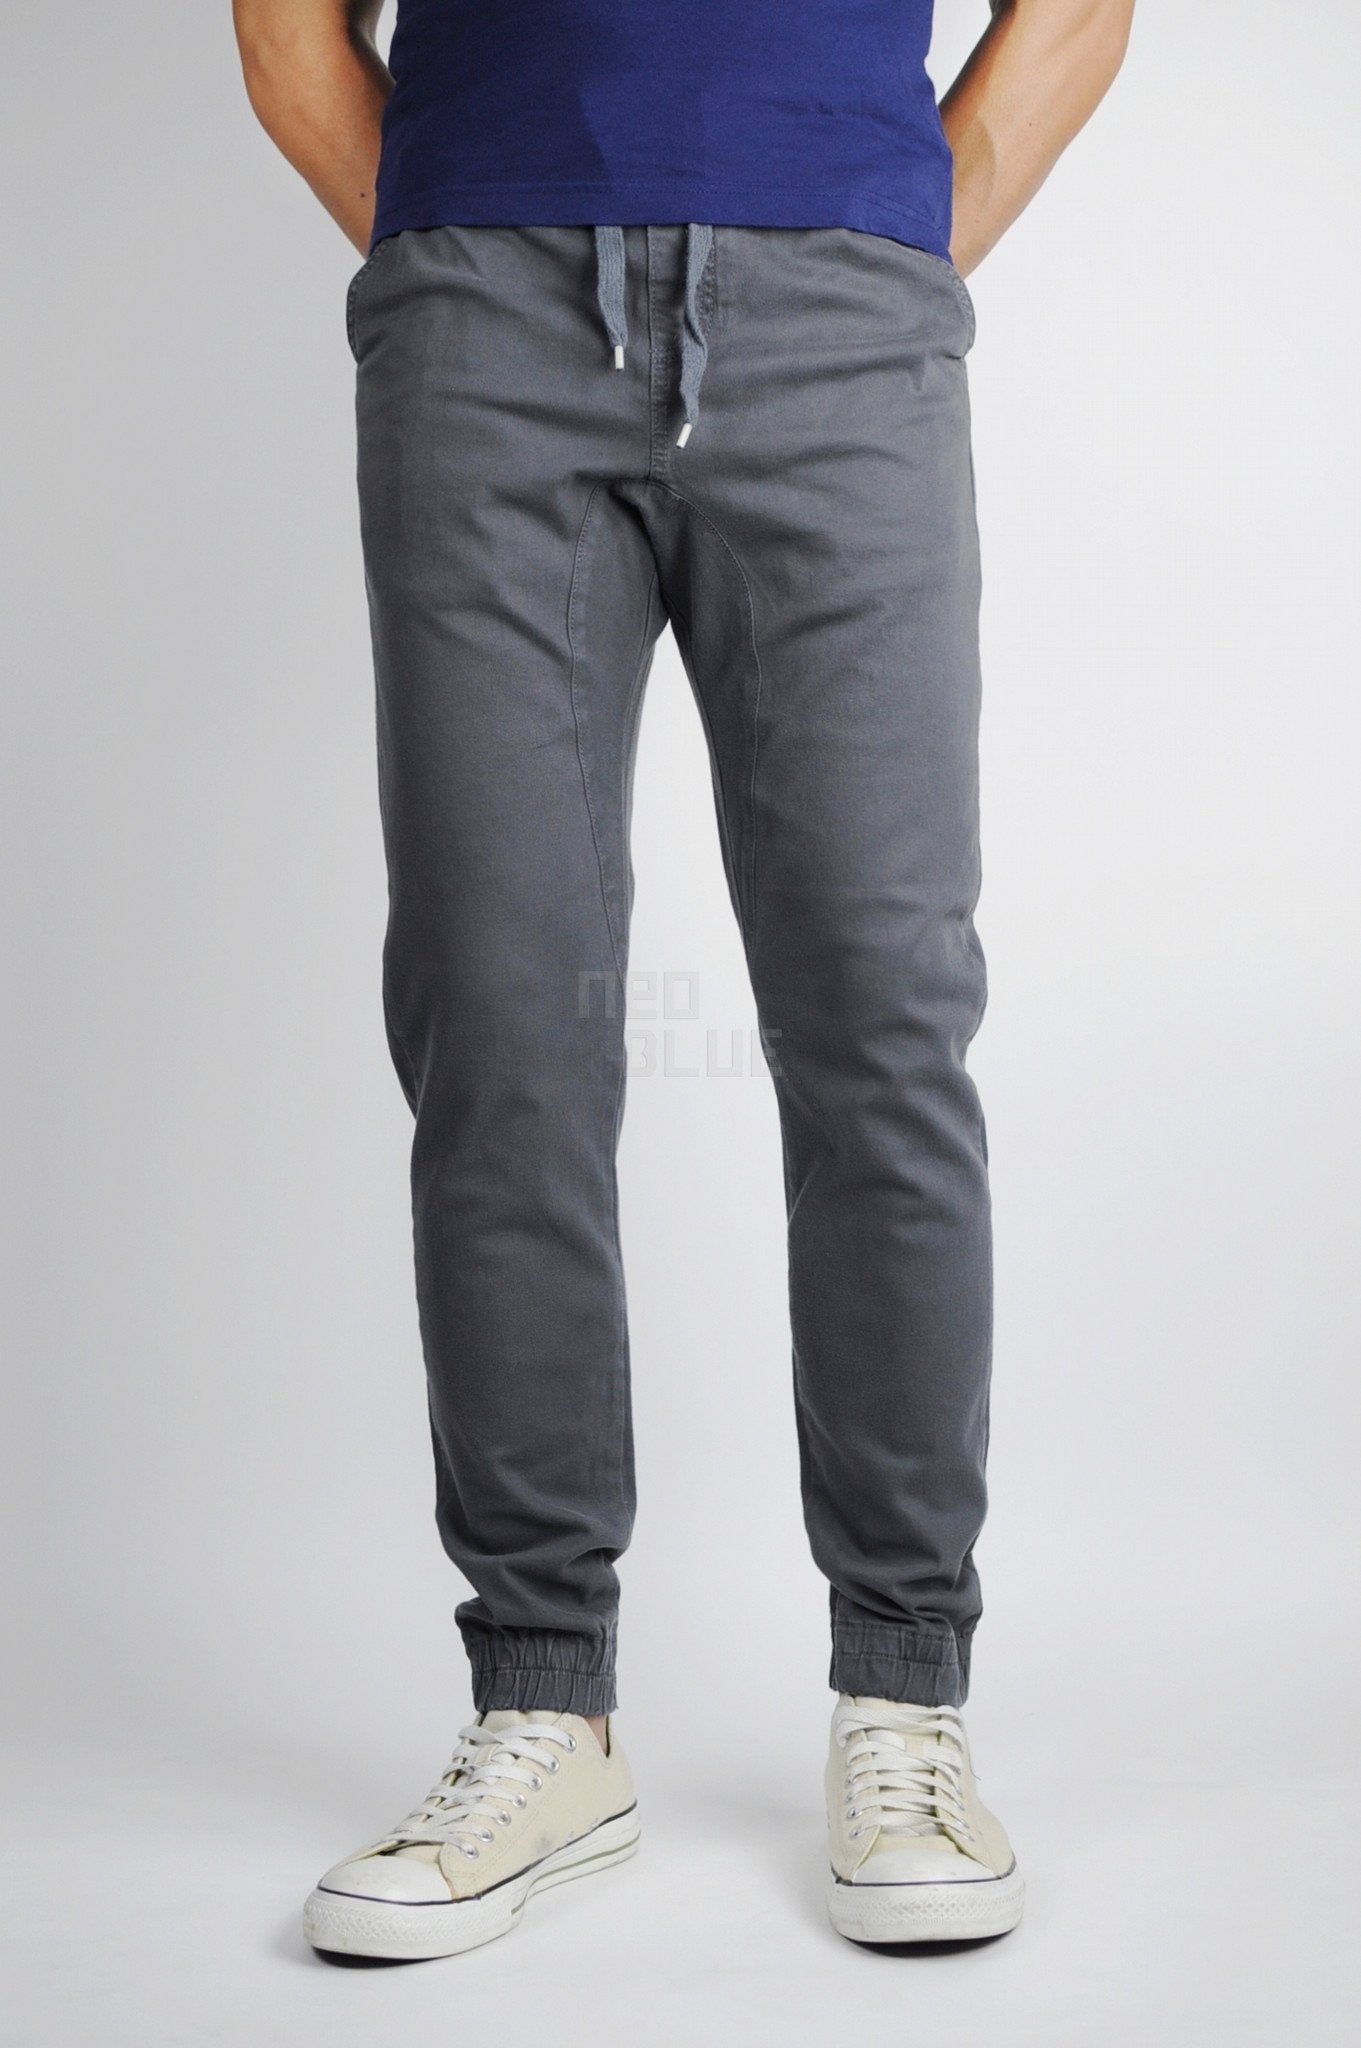 Neo Blue Jogger Pants - Xtreme Wear